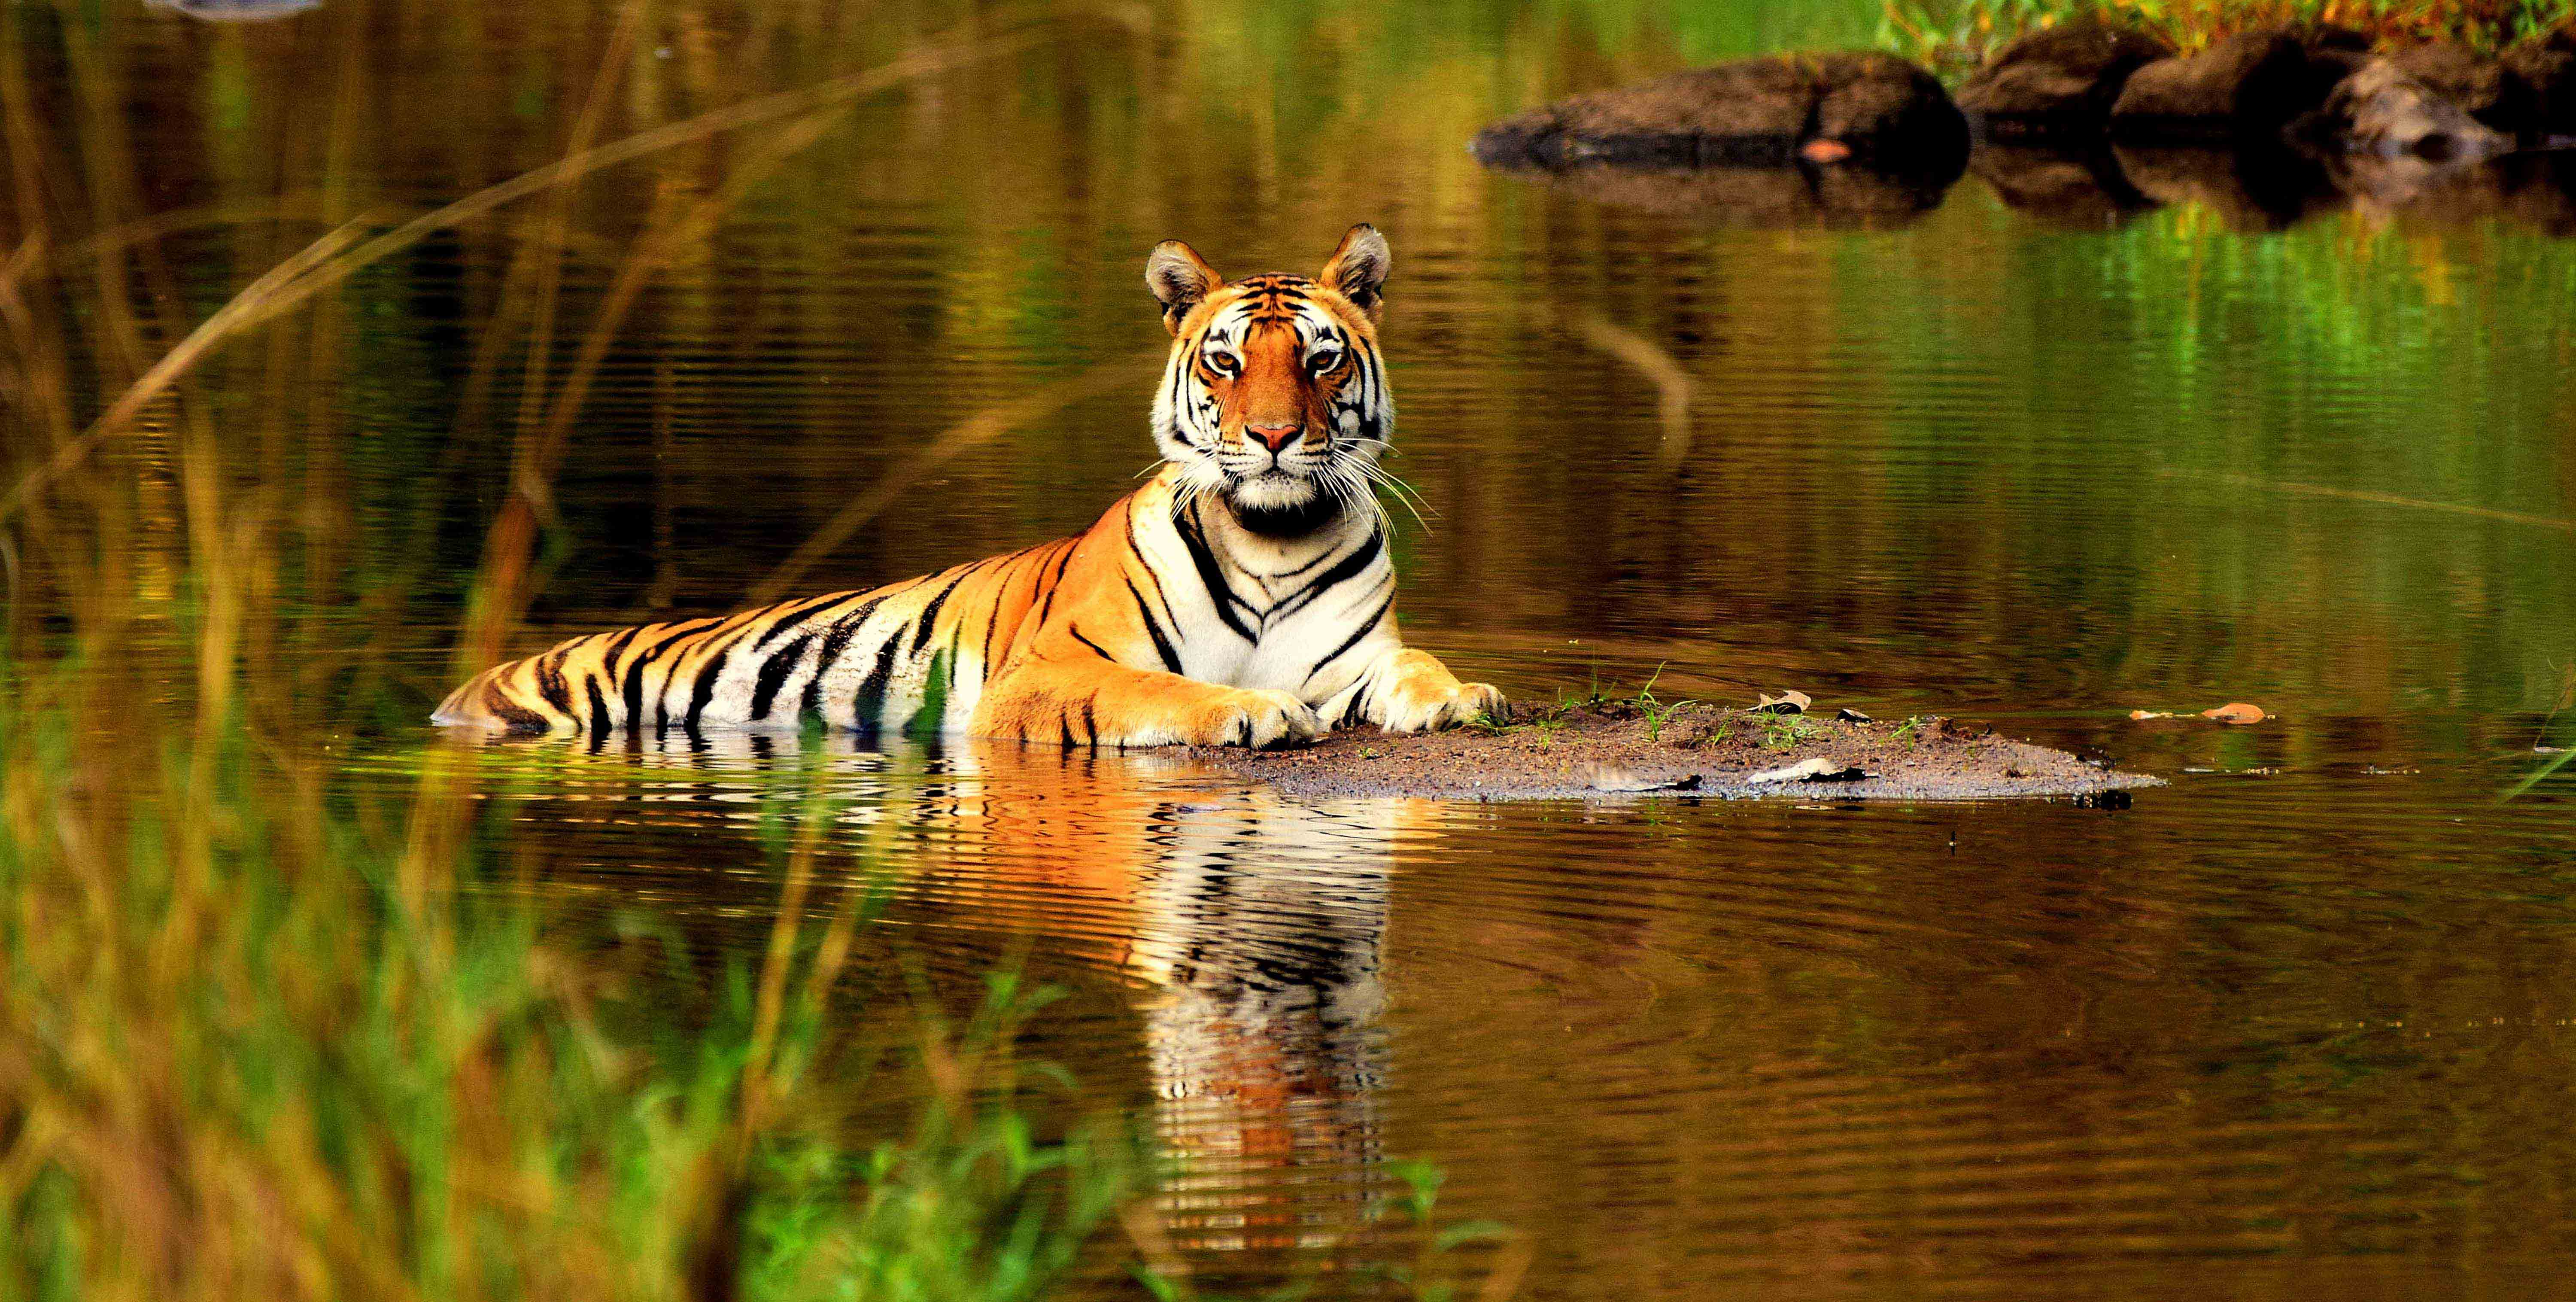 tiger safari meaning